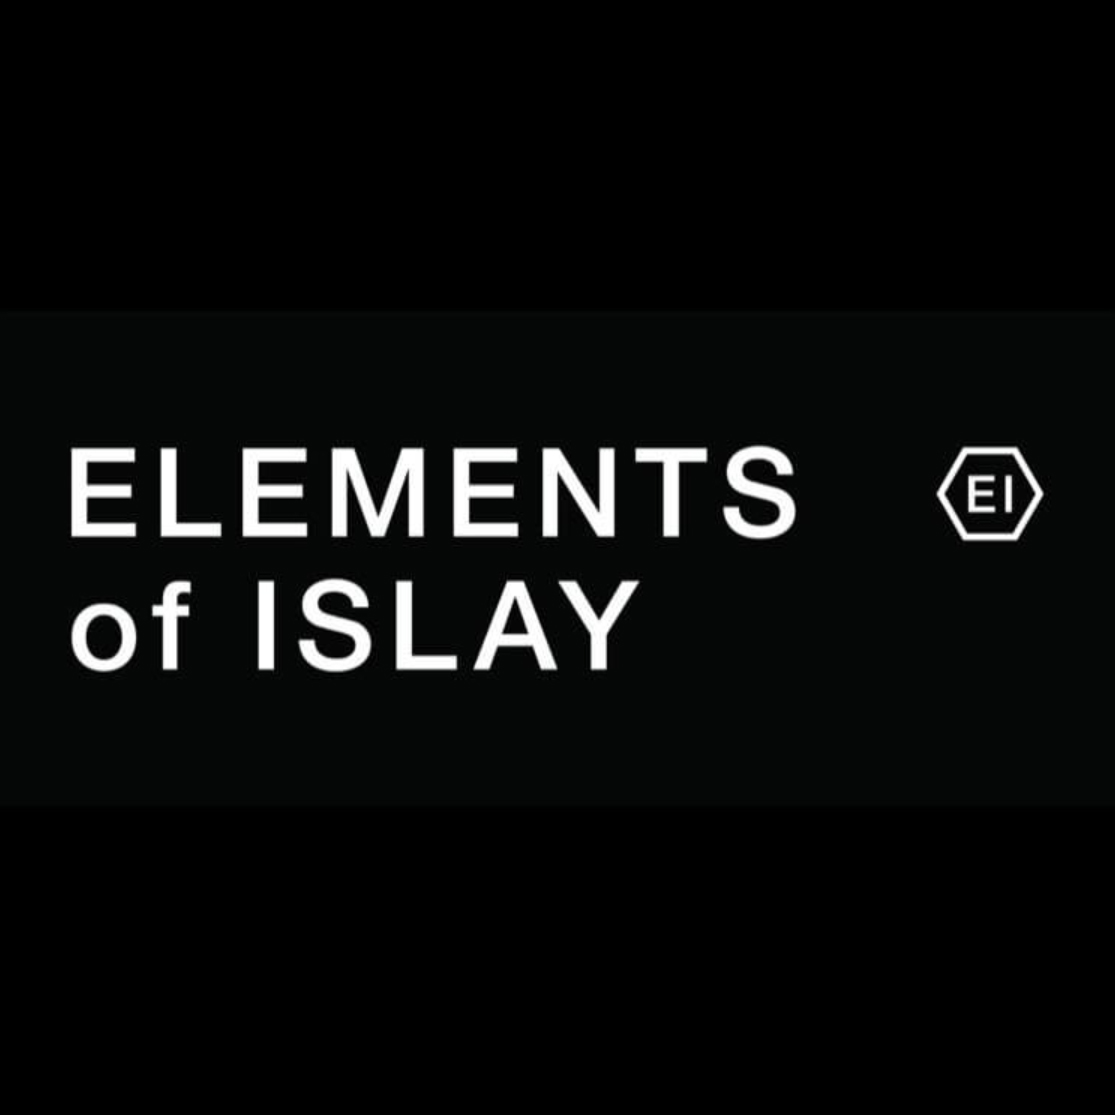 Elements of Islay